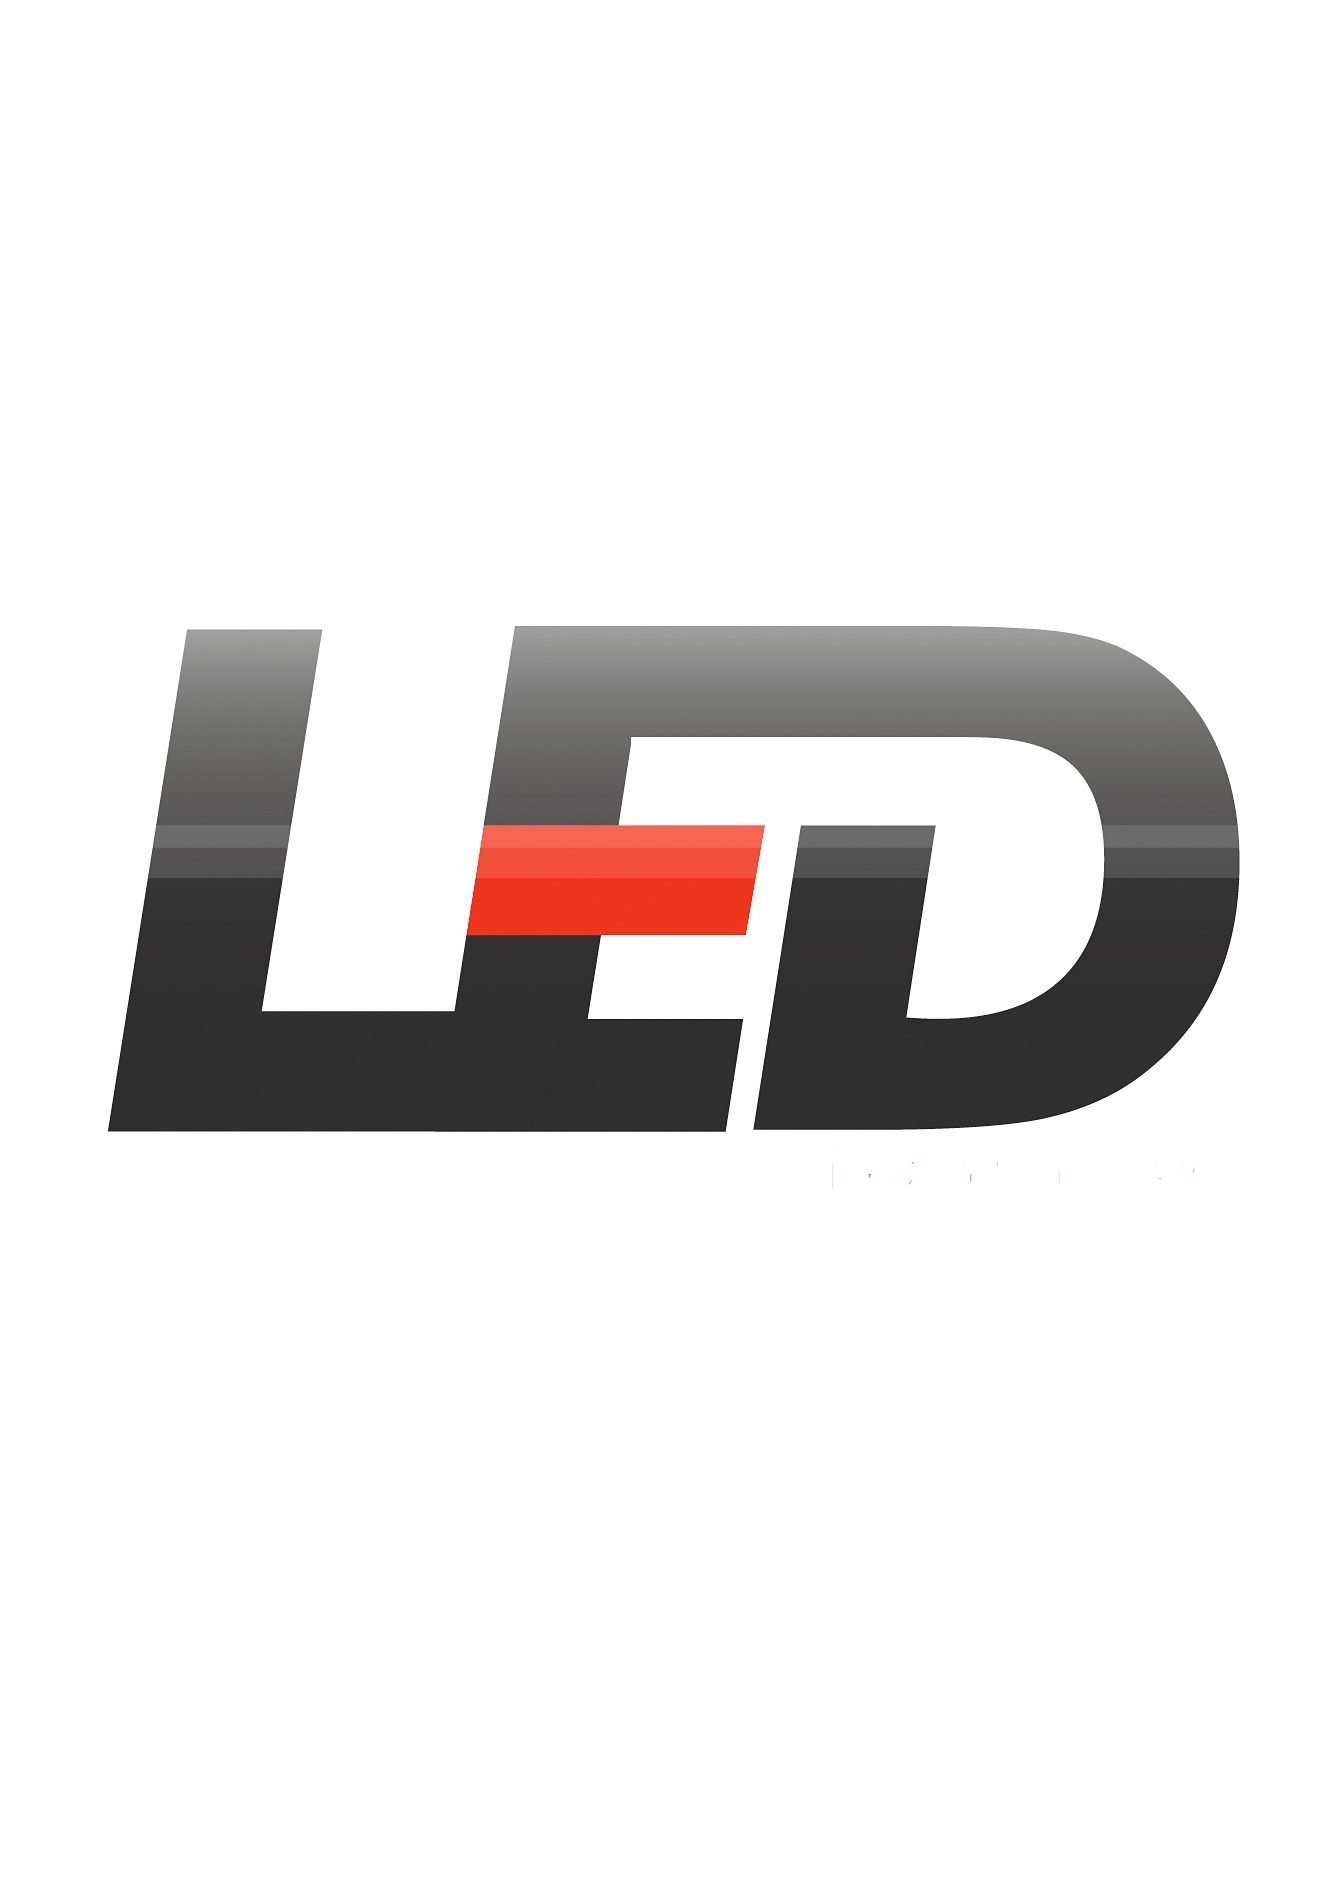 LED, Warmweiß, Lesearm, Direkt LED LED Leuchtmittel wechselbar, Leuchten MAX Stehlampe wechselbares